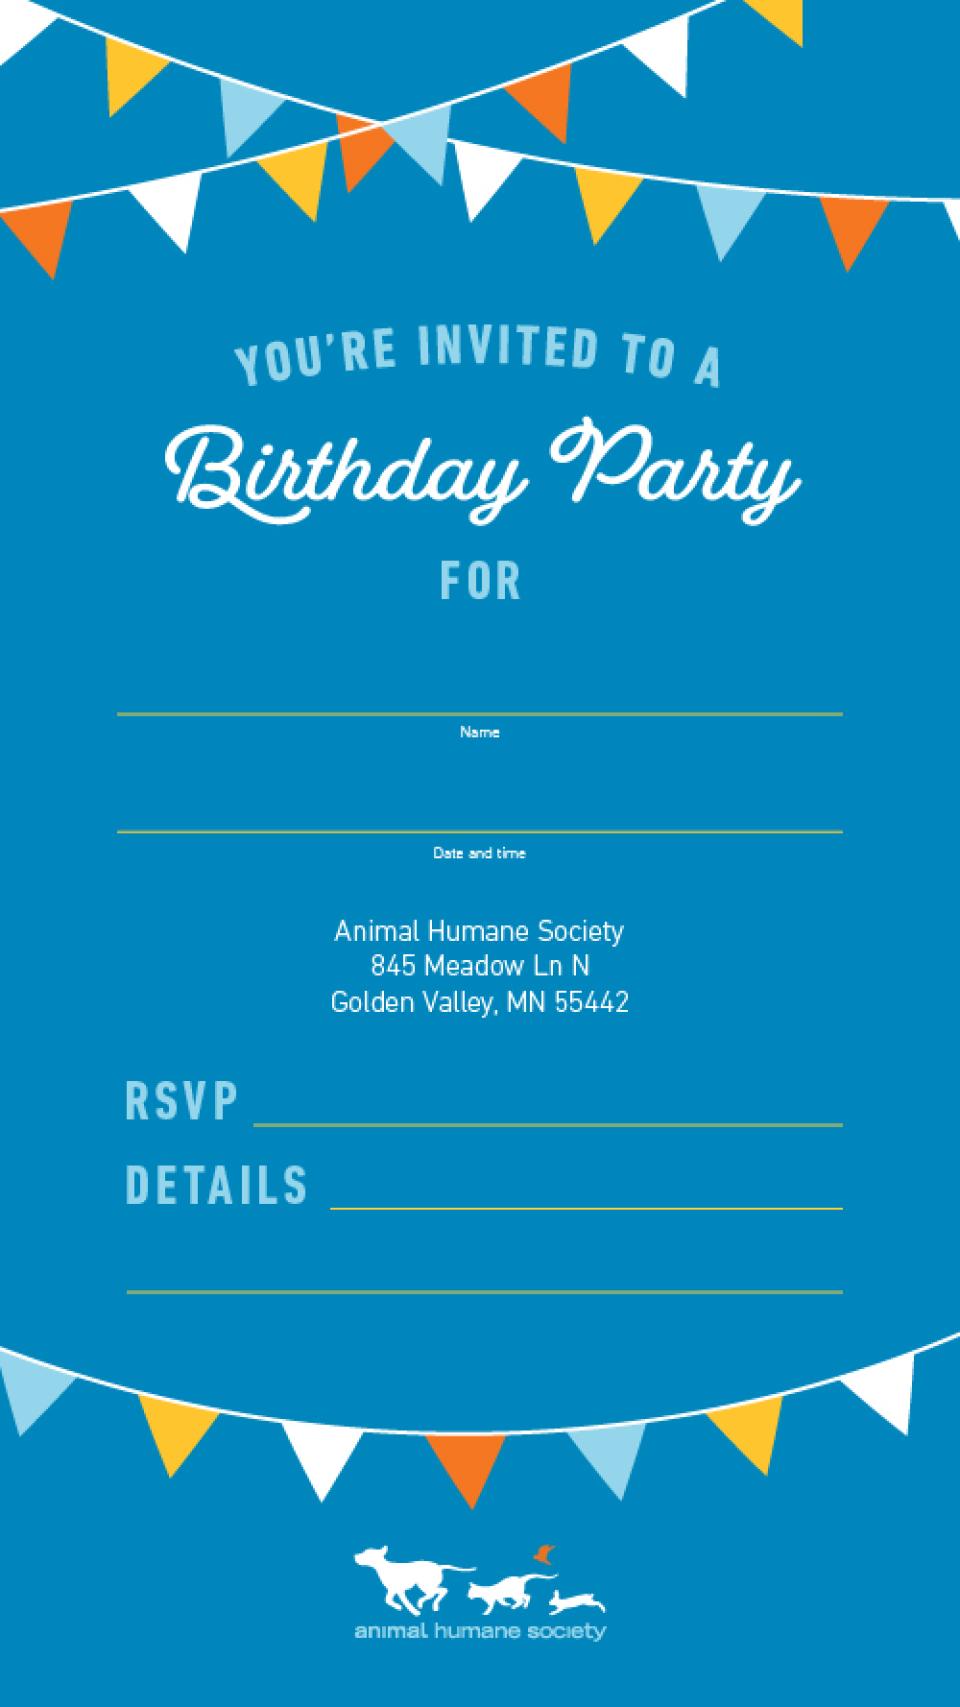 AHS birthday party digital invitation